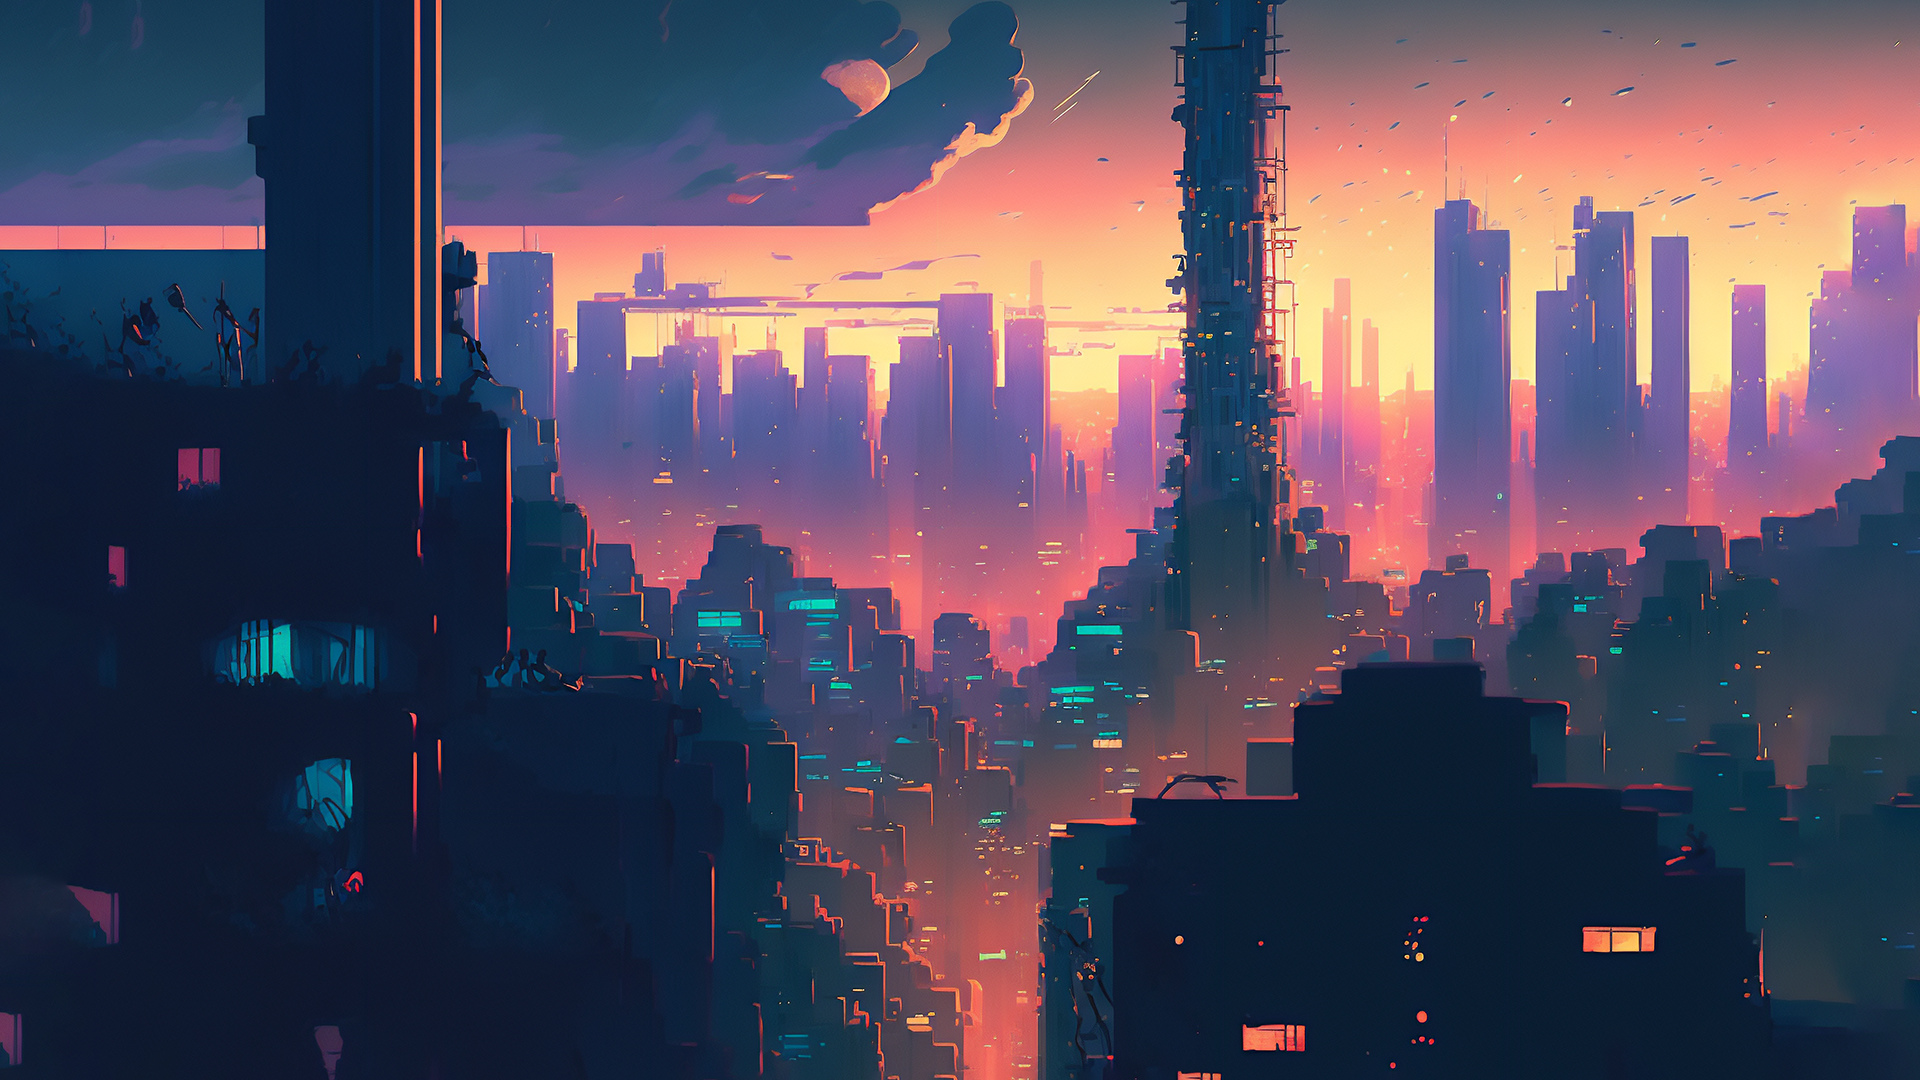 Ai Art Cyberpunk City Skyline Illustration Sunset Glow 1920x1080